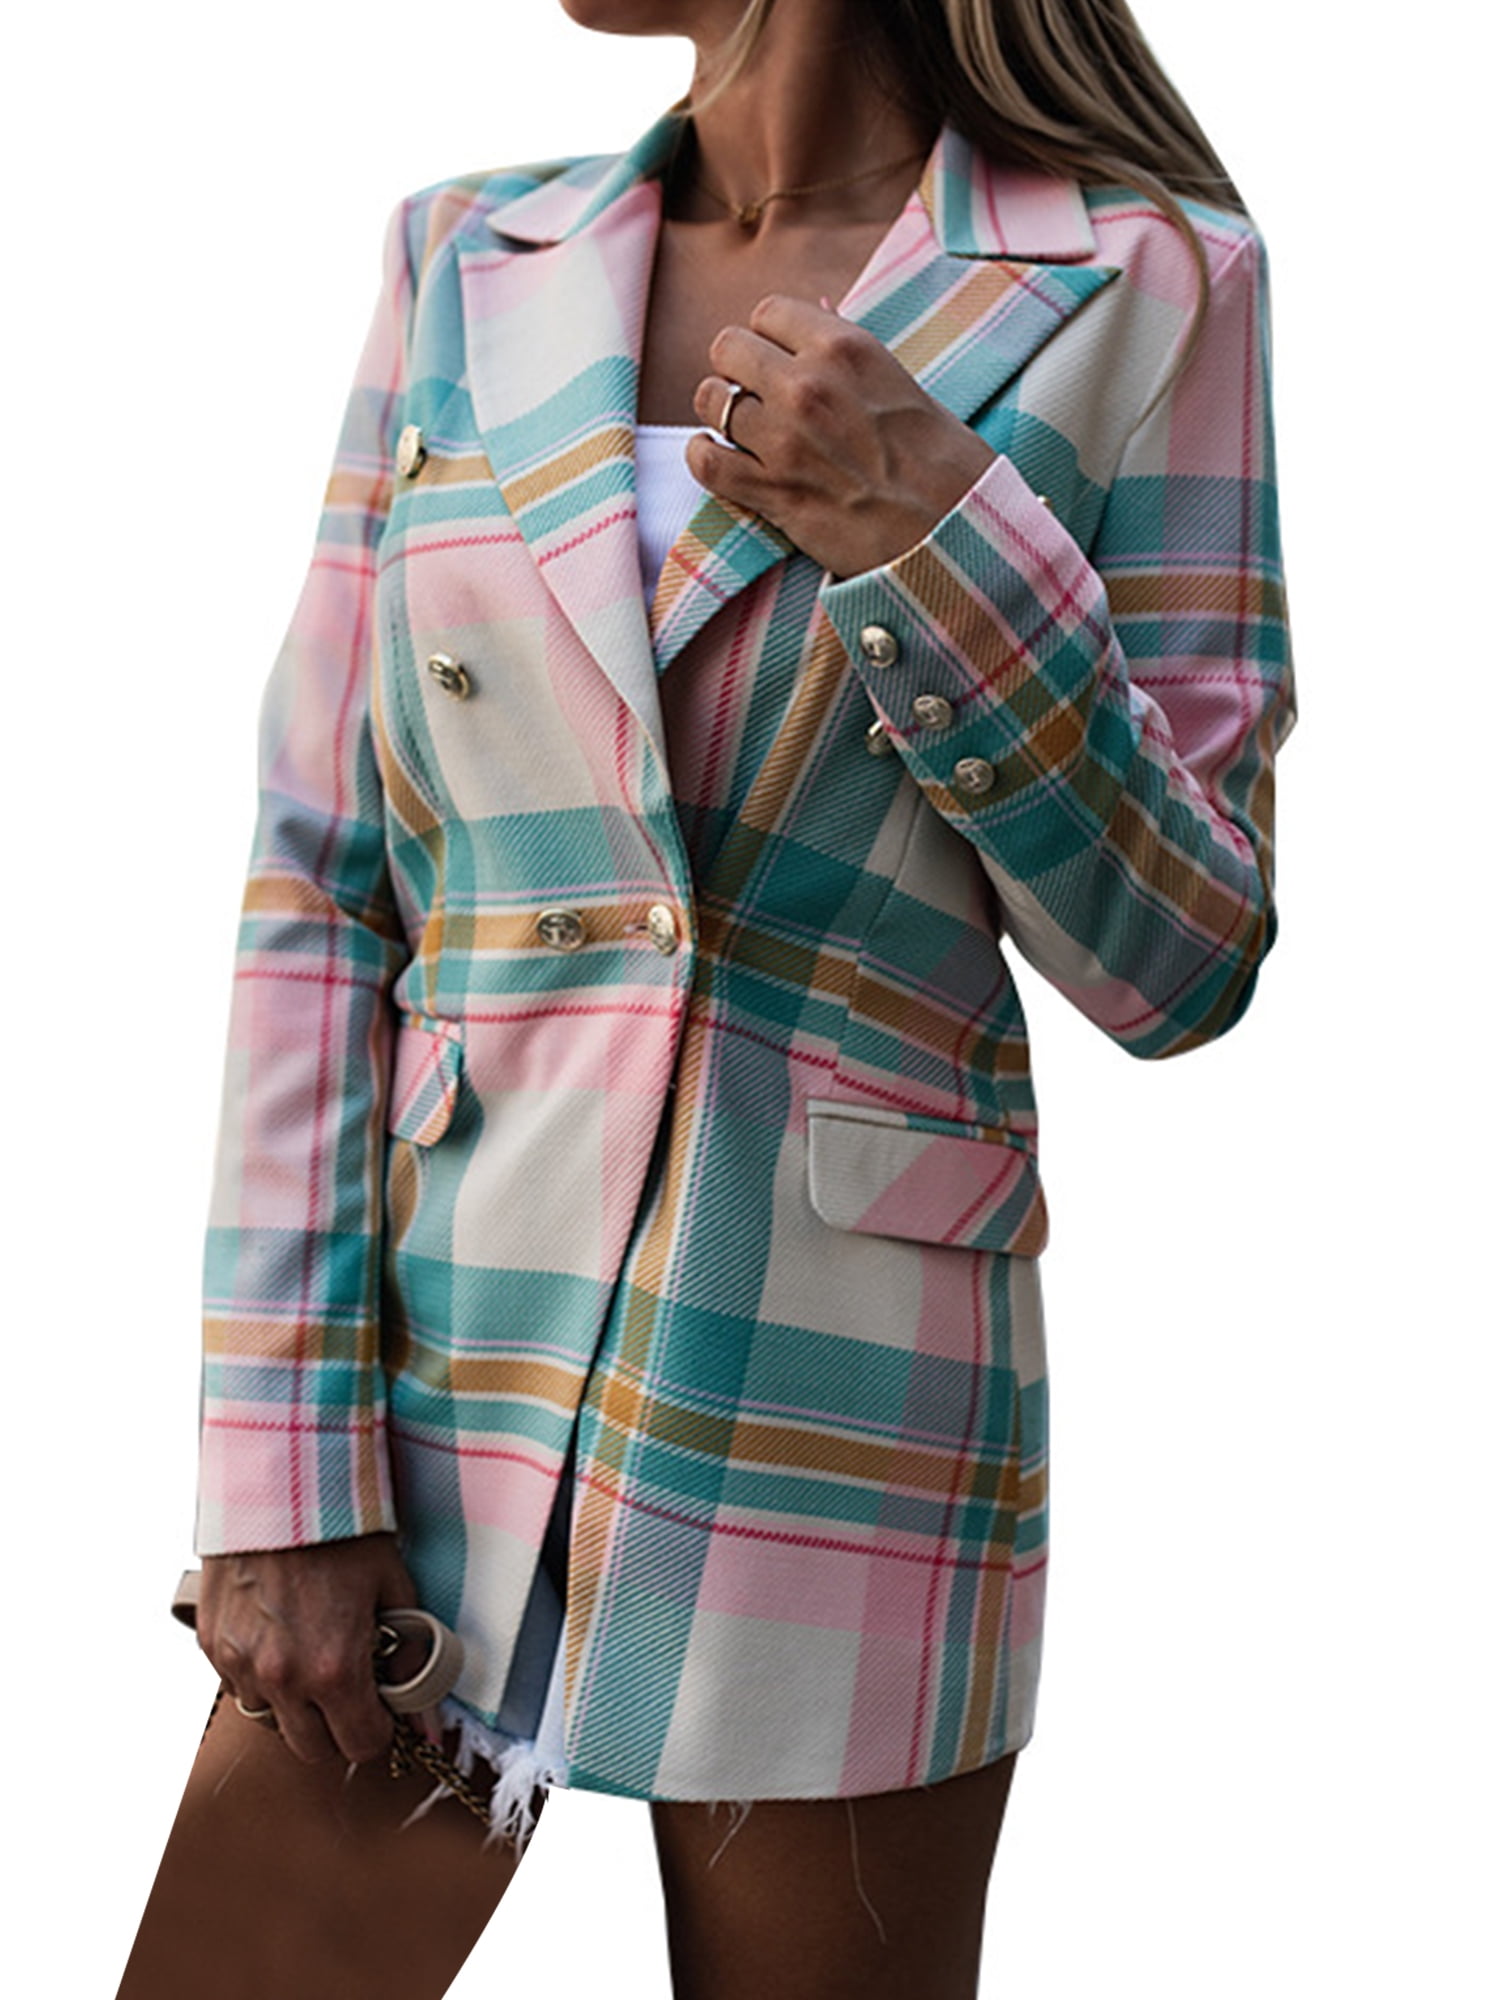 Colourful Womens Button Lapel Irregular Hem Solid Long Sleeve Blazer Jackets